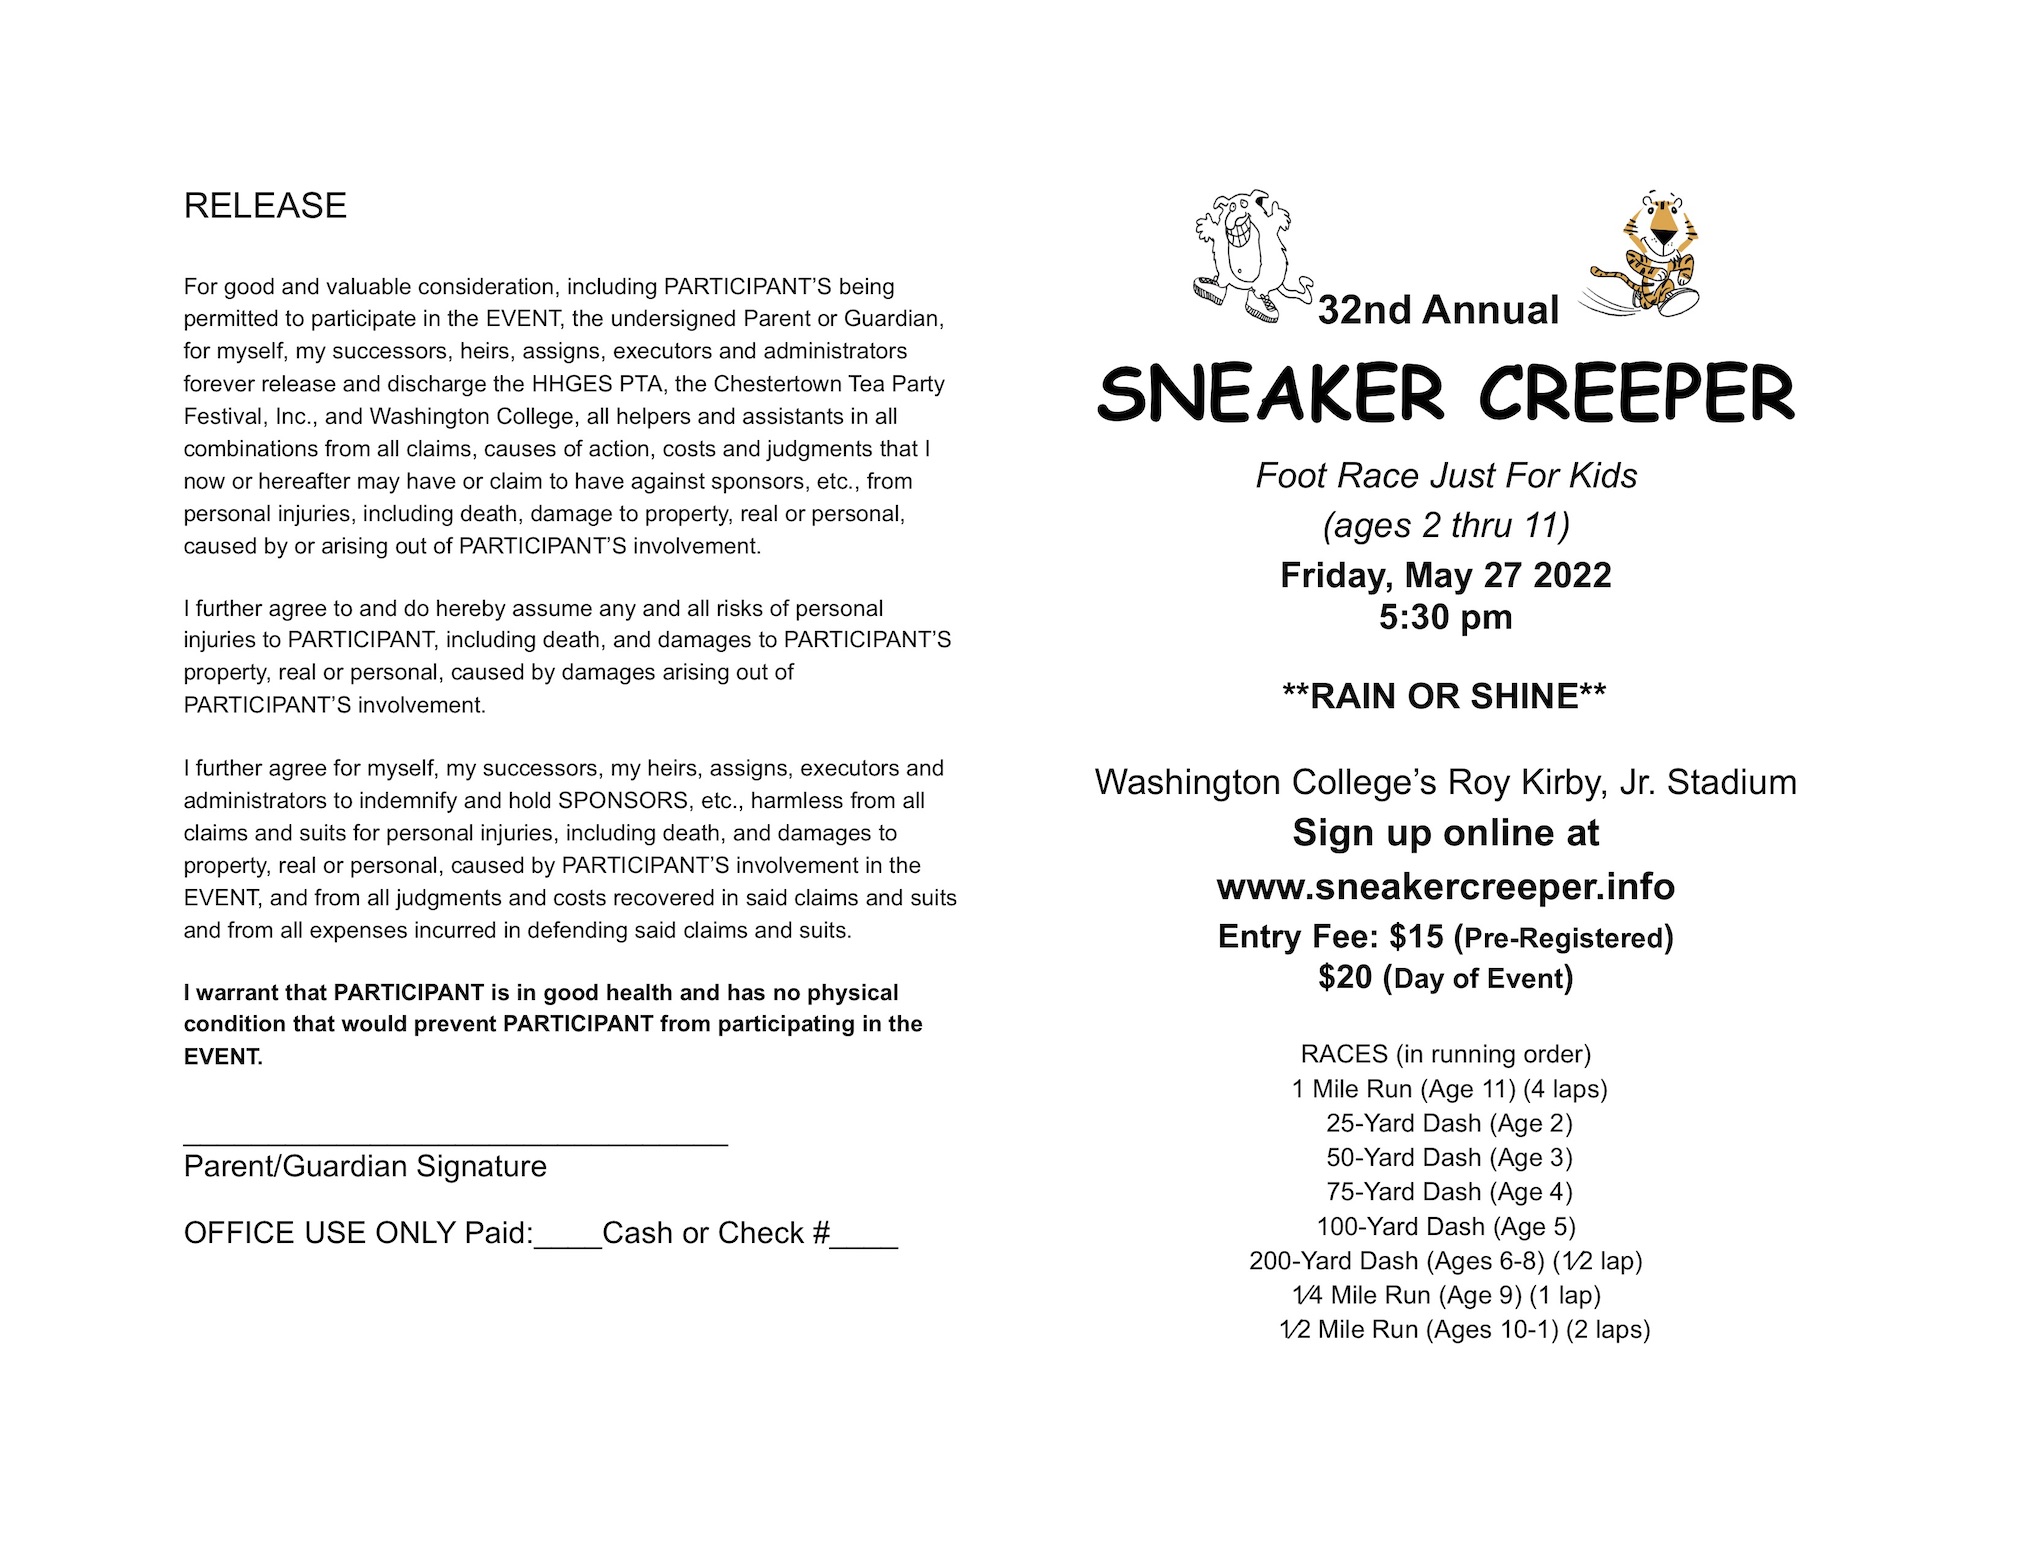 2022 Sneaker Creeper registration form